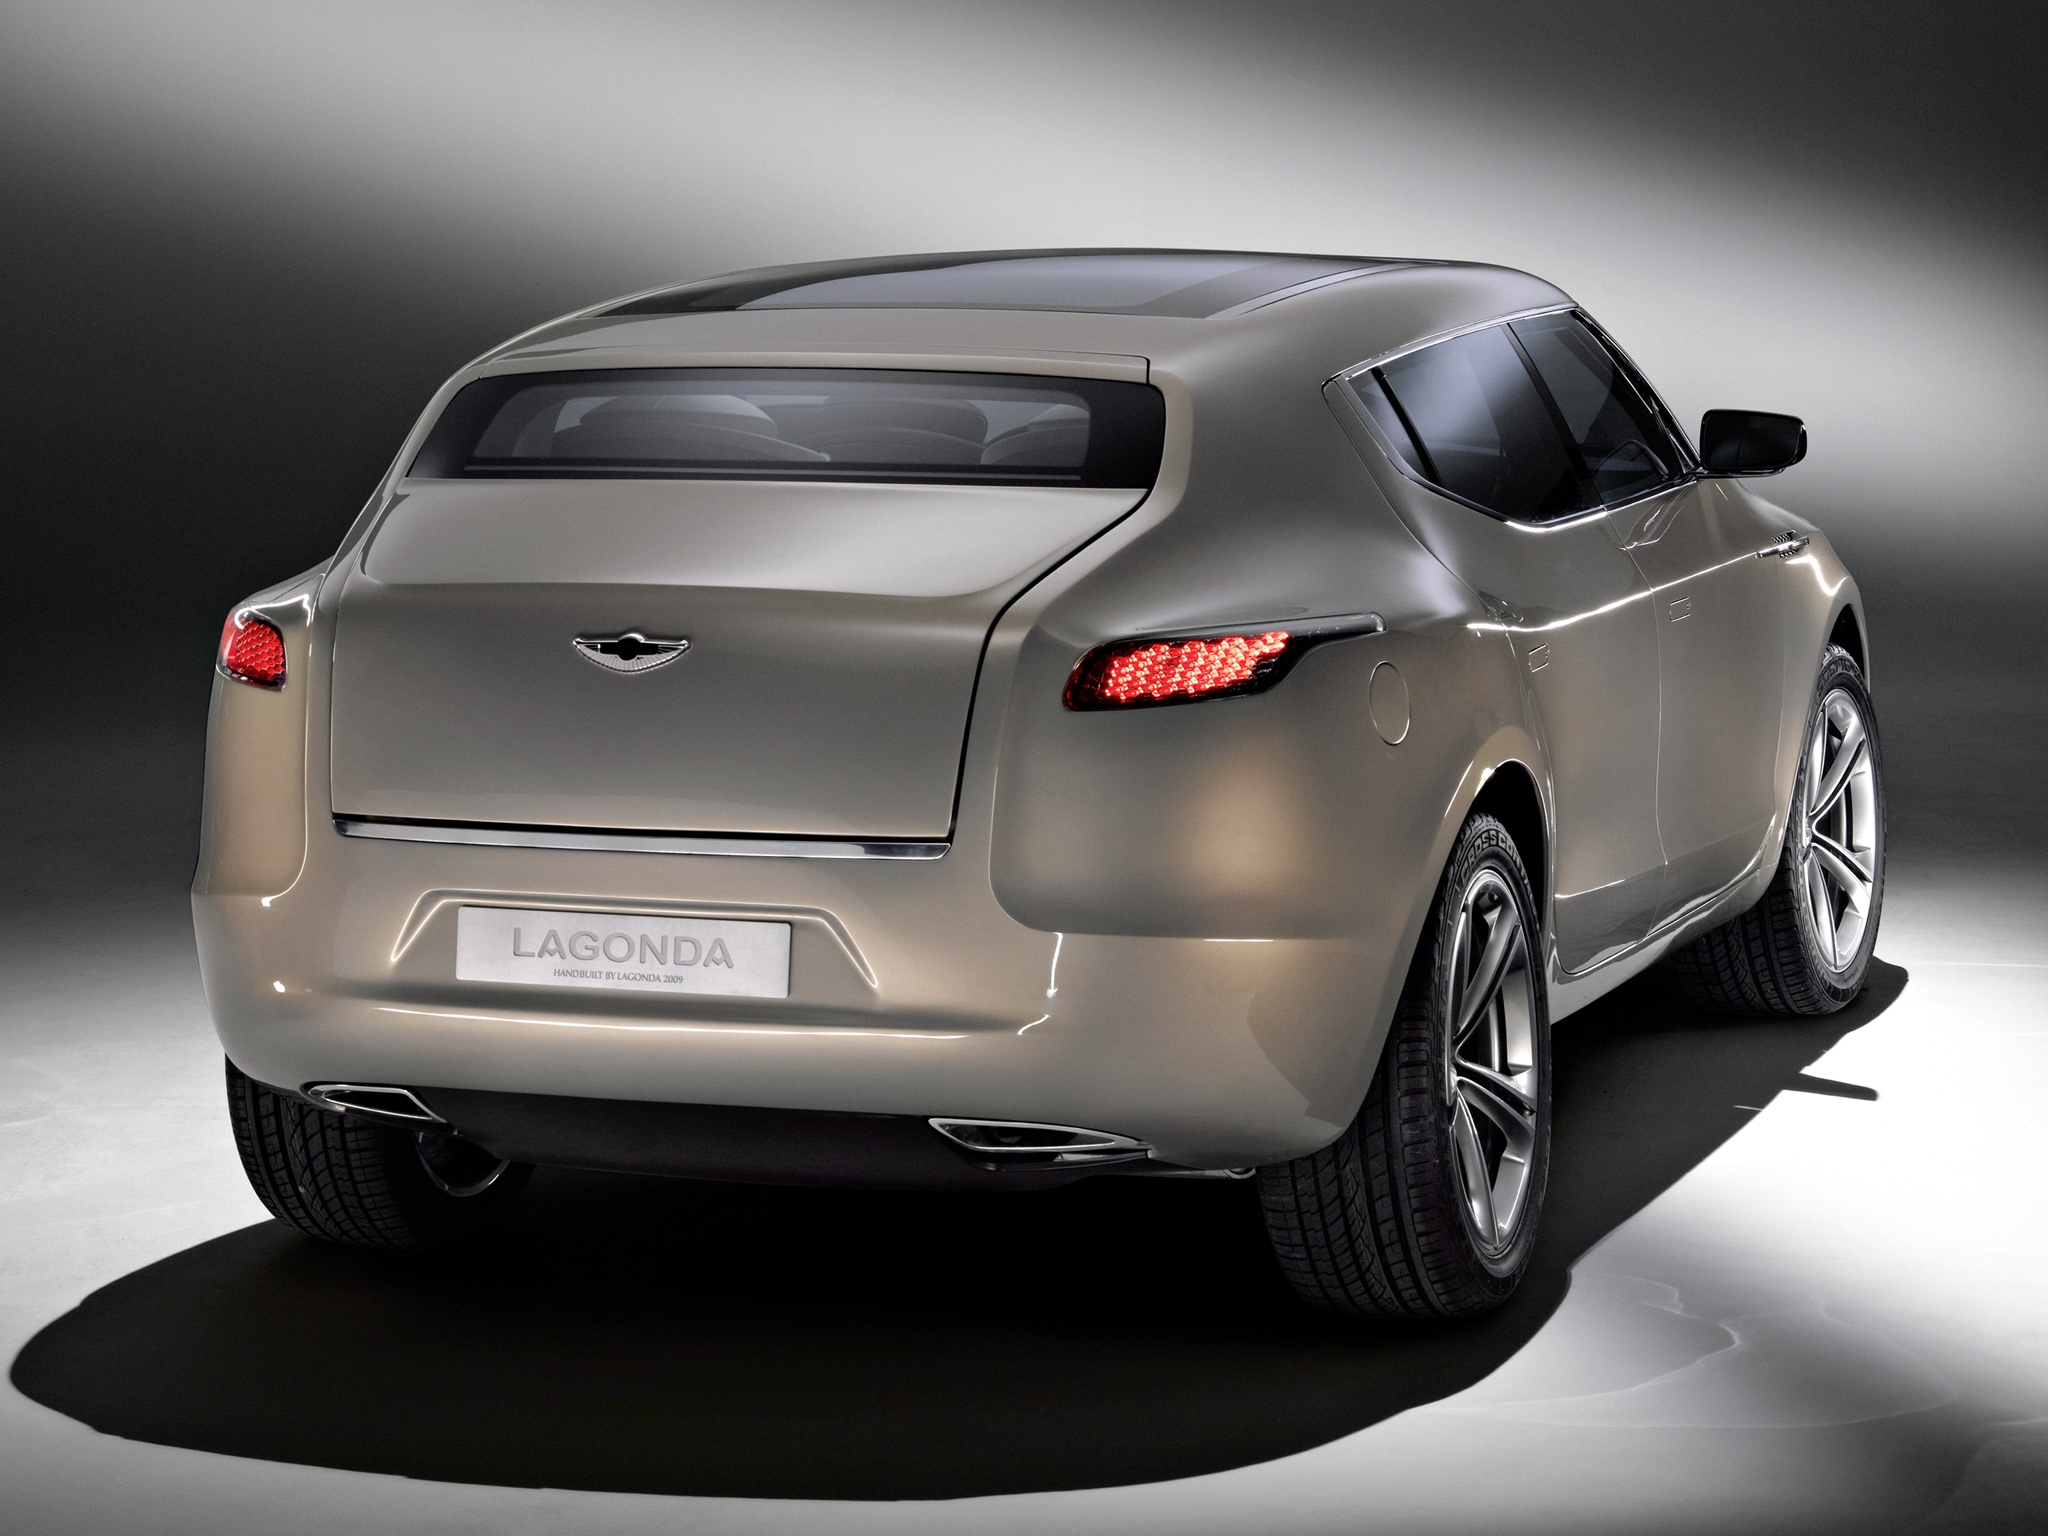 Full HD aston martin, cars, back view, rear view, style, 2009, concept car, beige metallic, lagonda